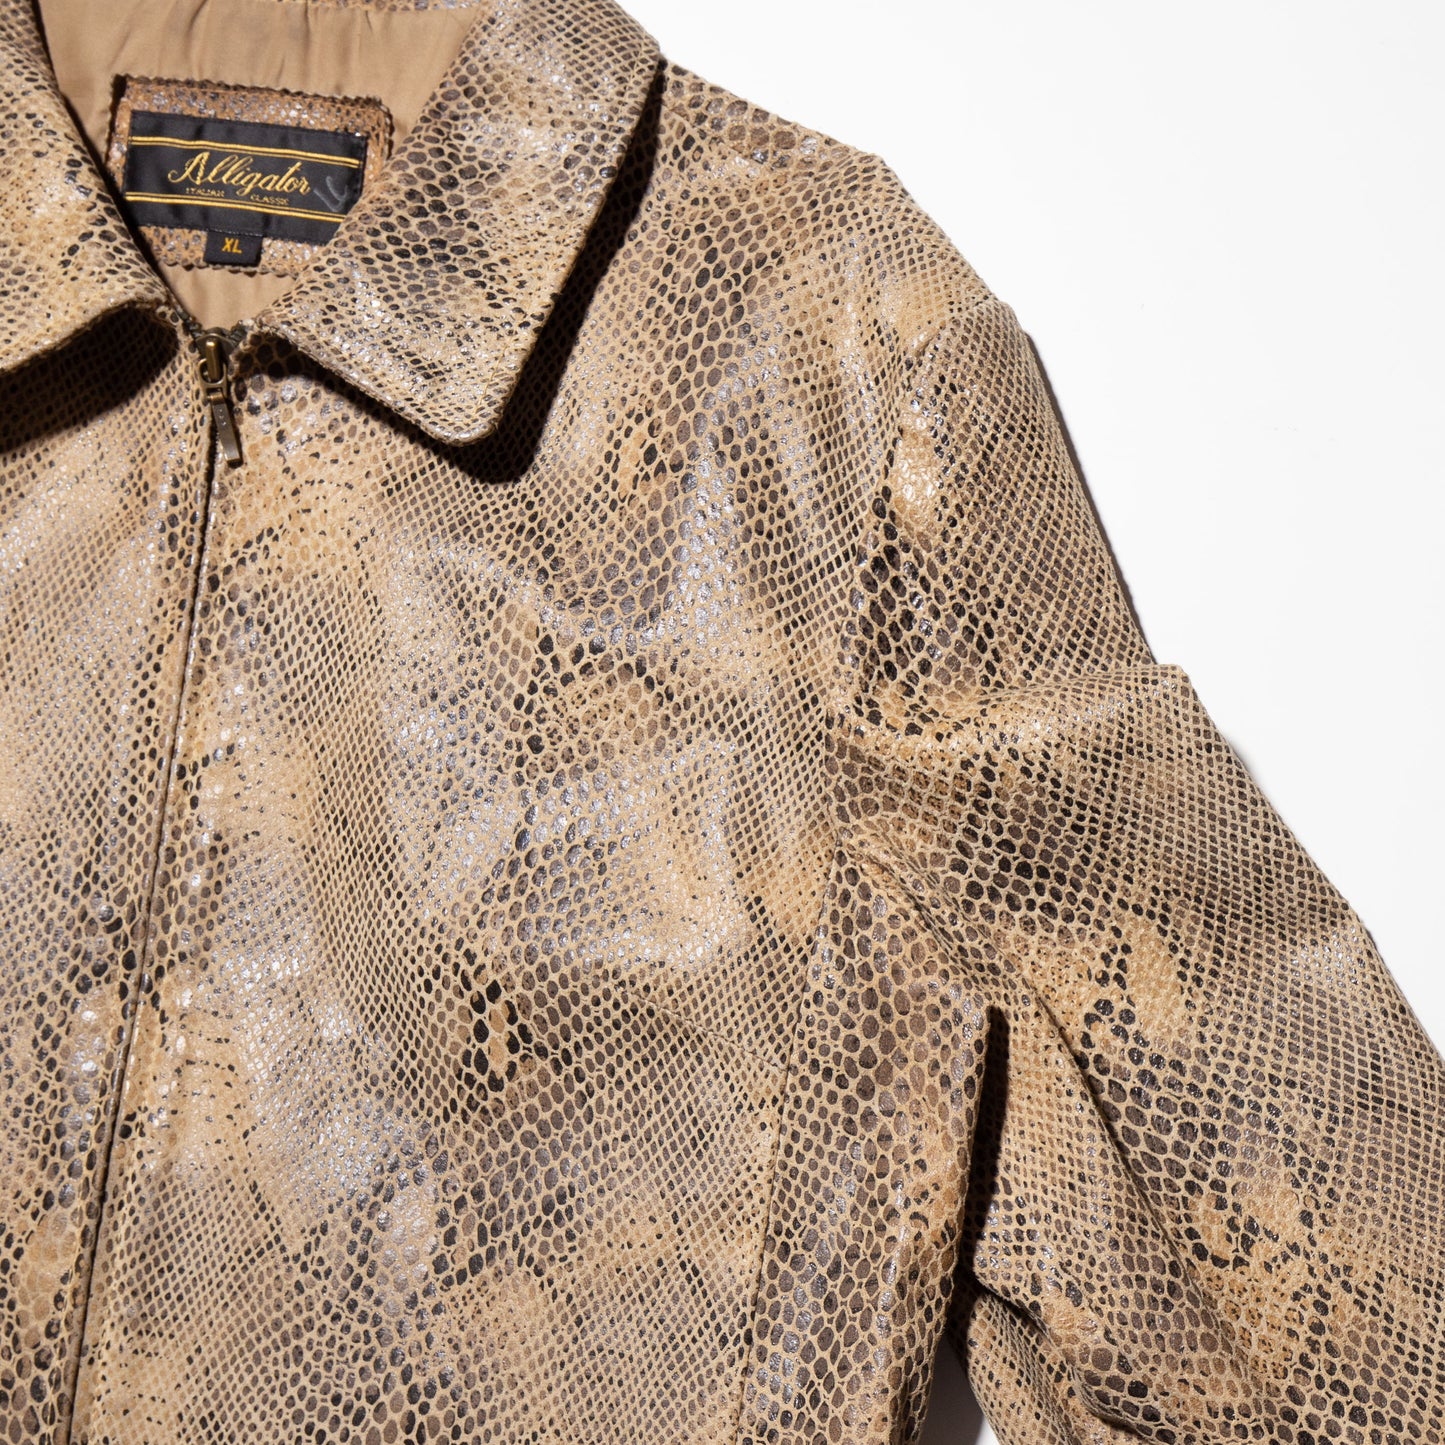 vintage python pattern leather jacket